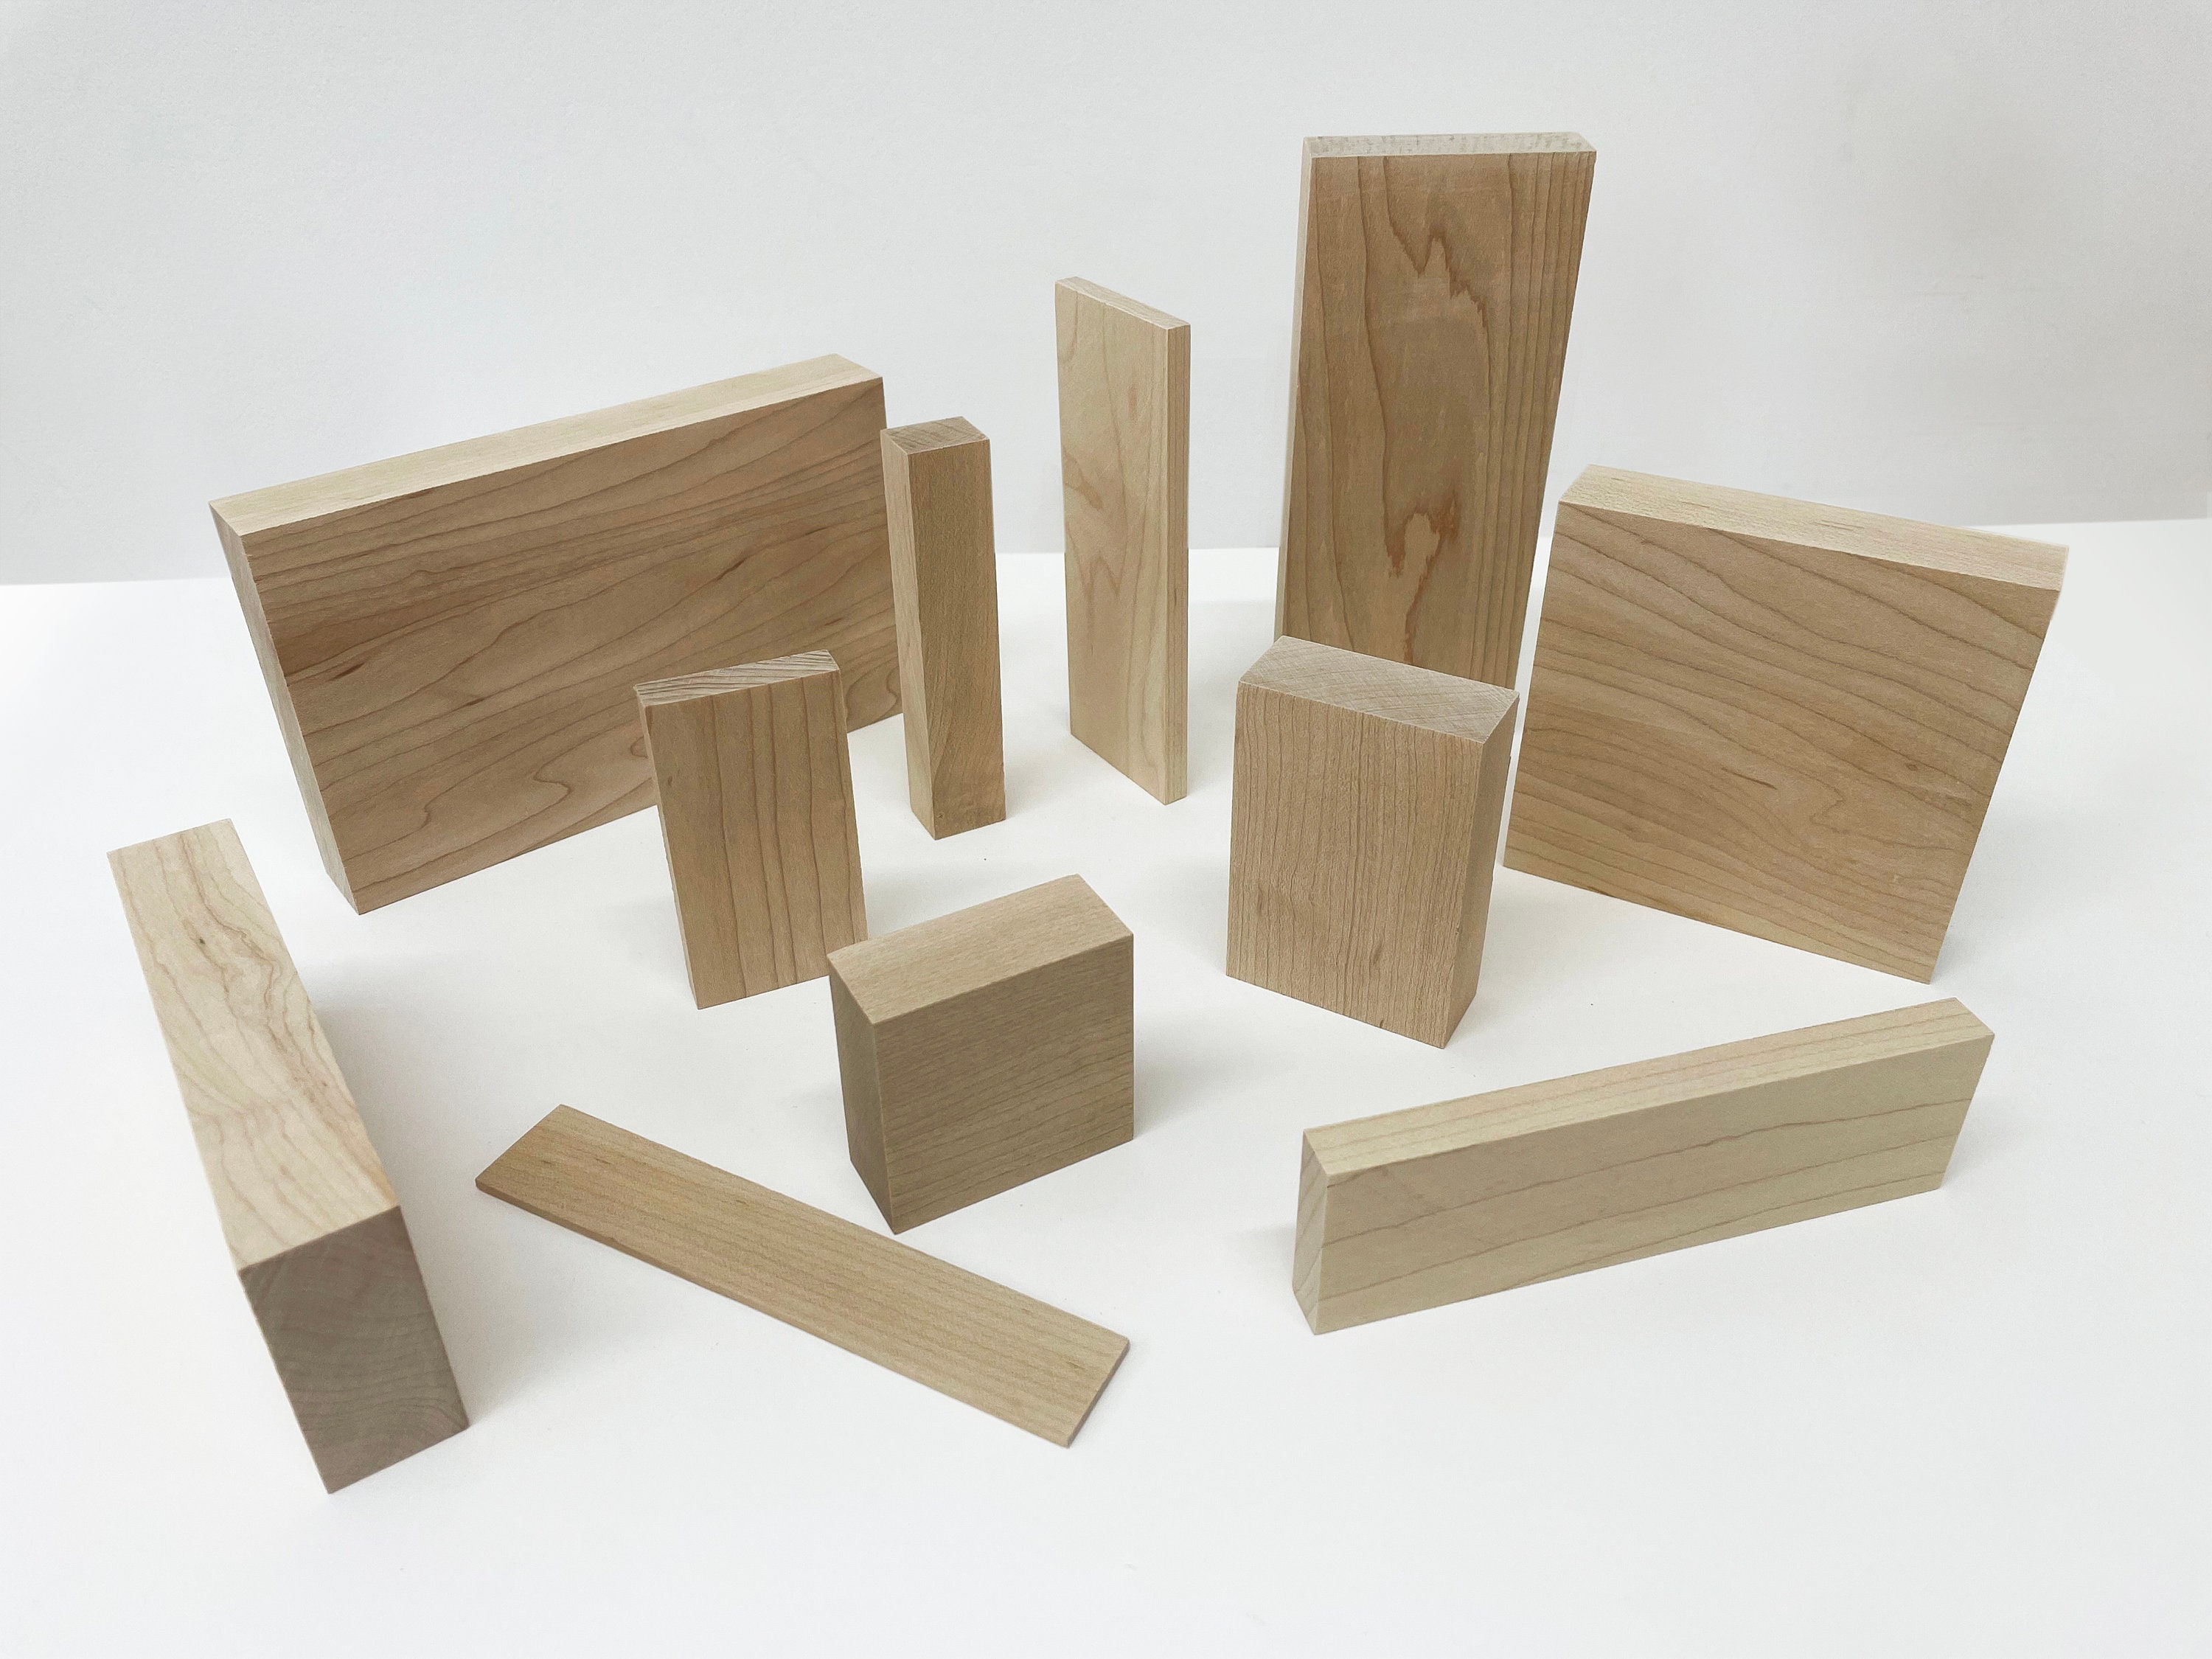 Beavercraft BW Basswood Carving Blocks /whittling Wood Carving Kit for  Beginners/ Unfinished Wood Blocks 16pcs 